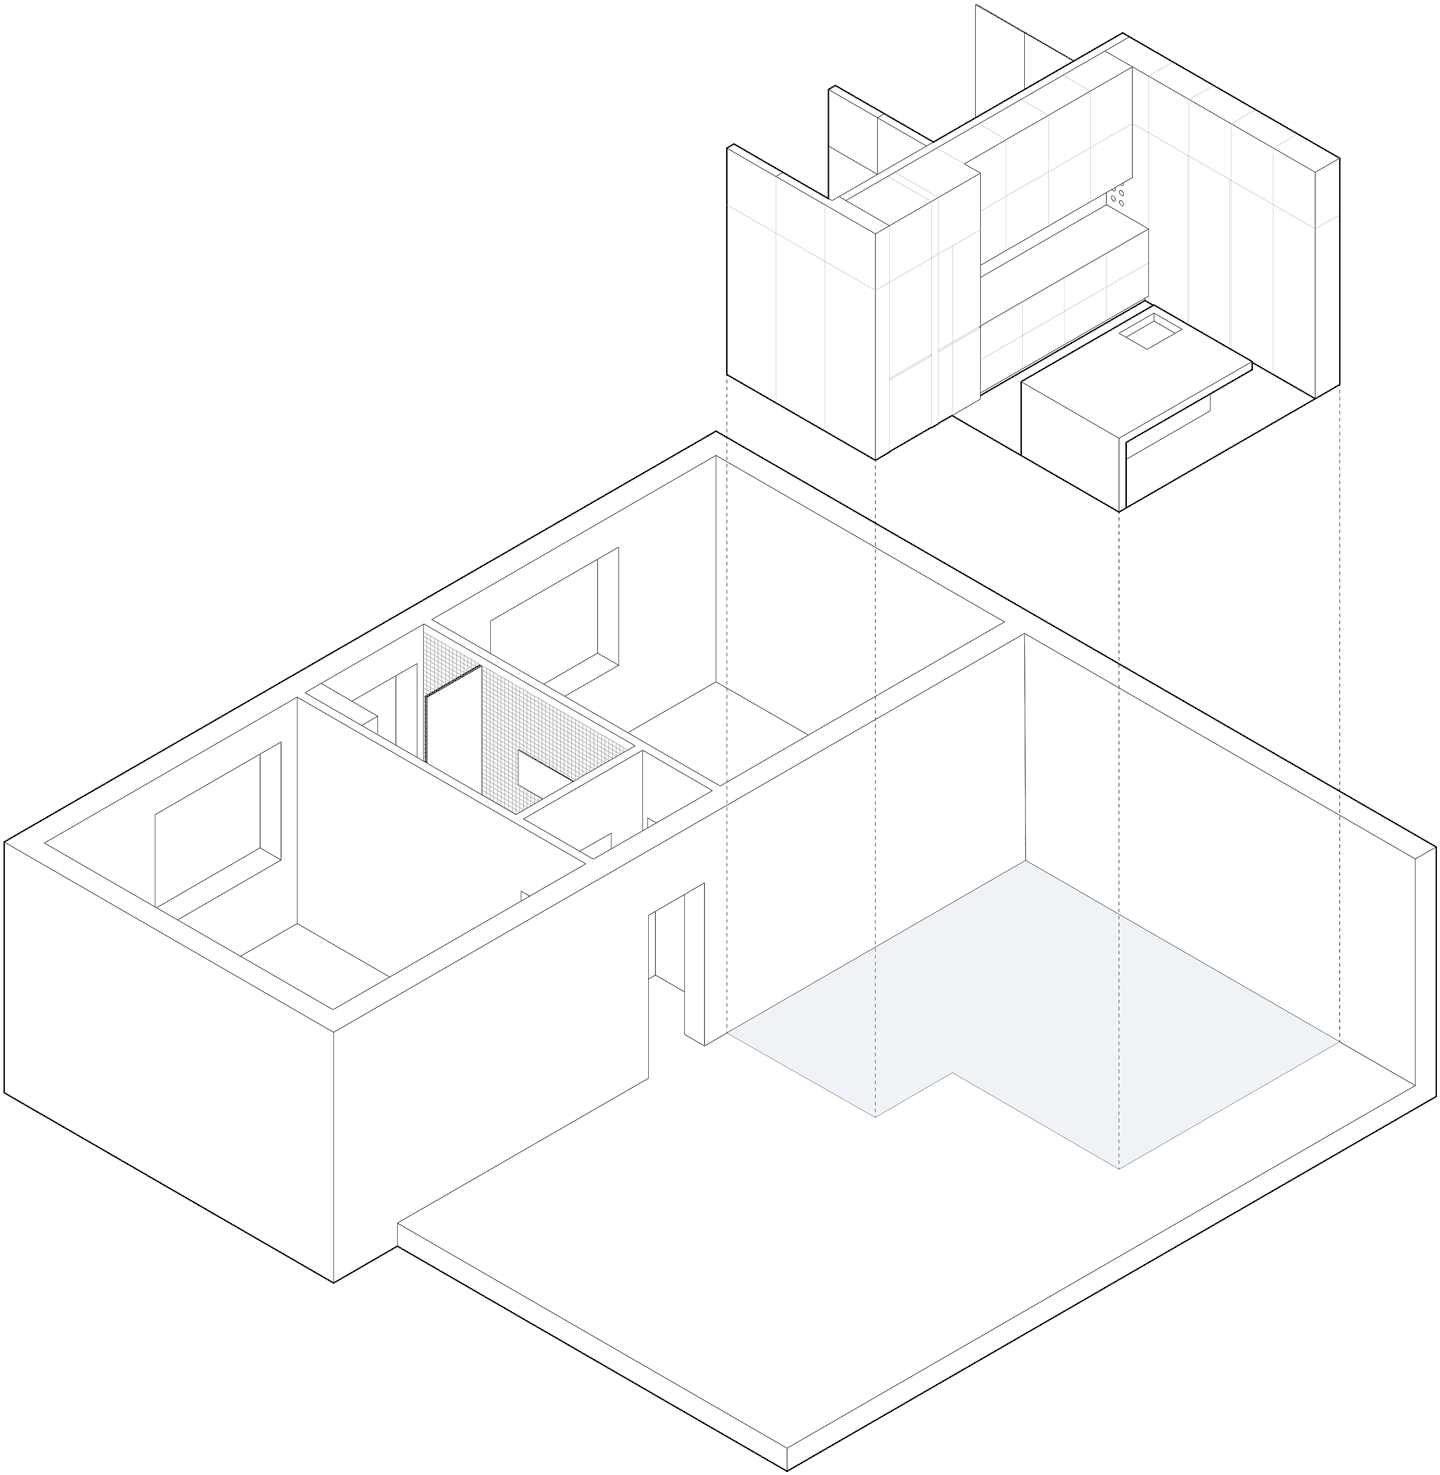 Apartment in Pisa - Axonometric drawing concept